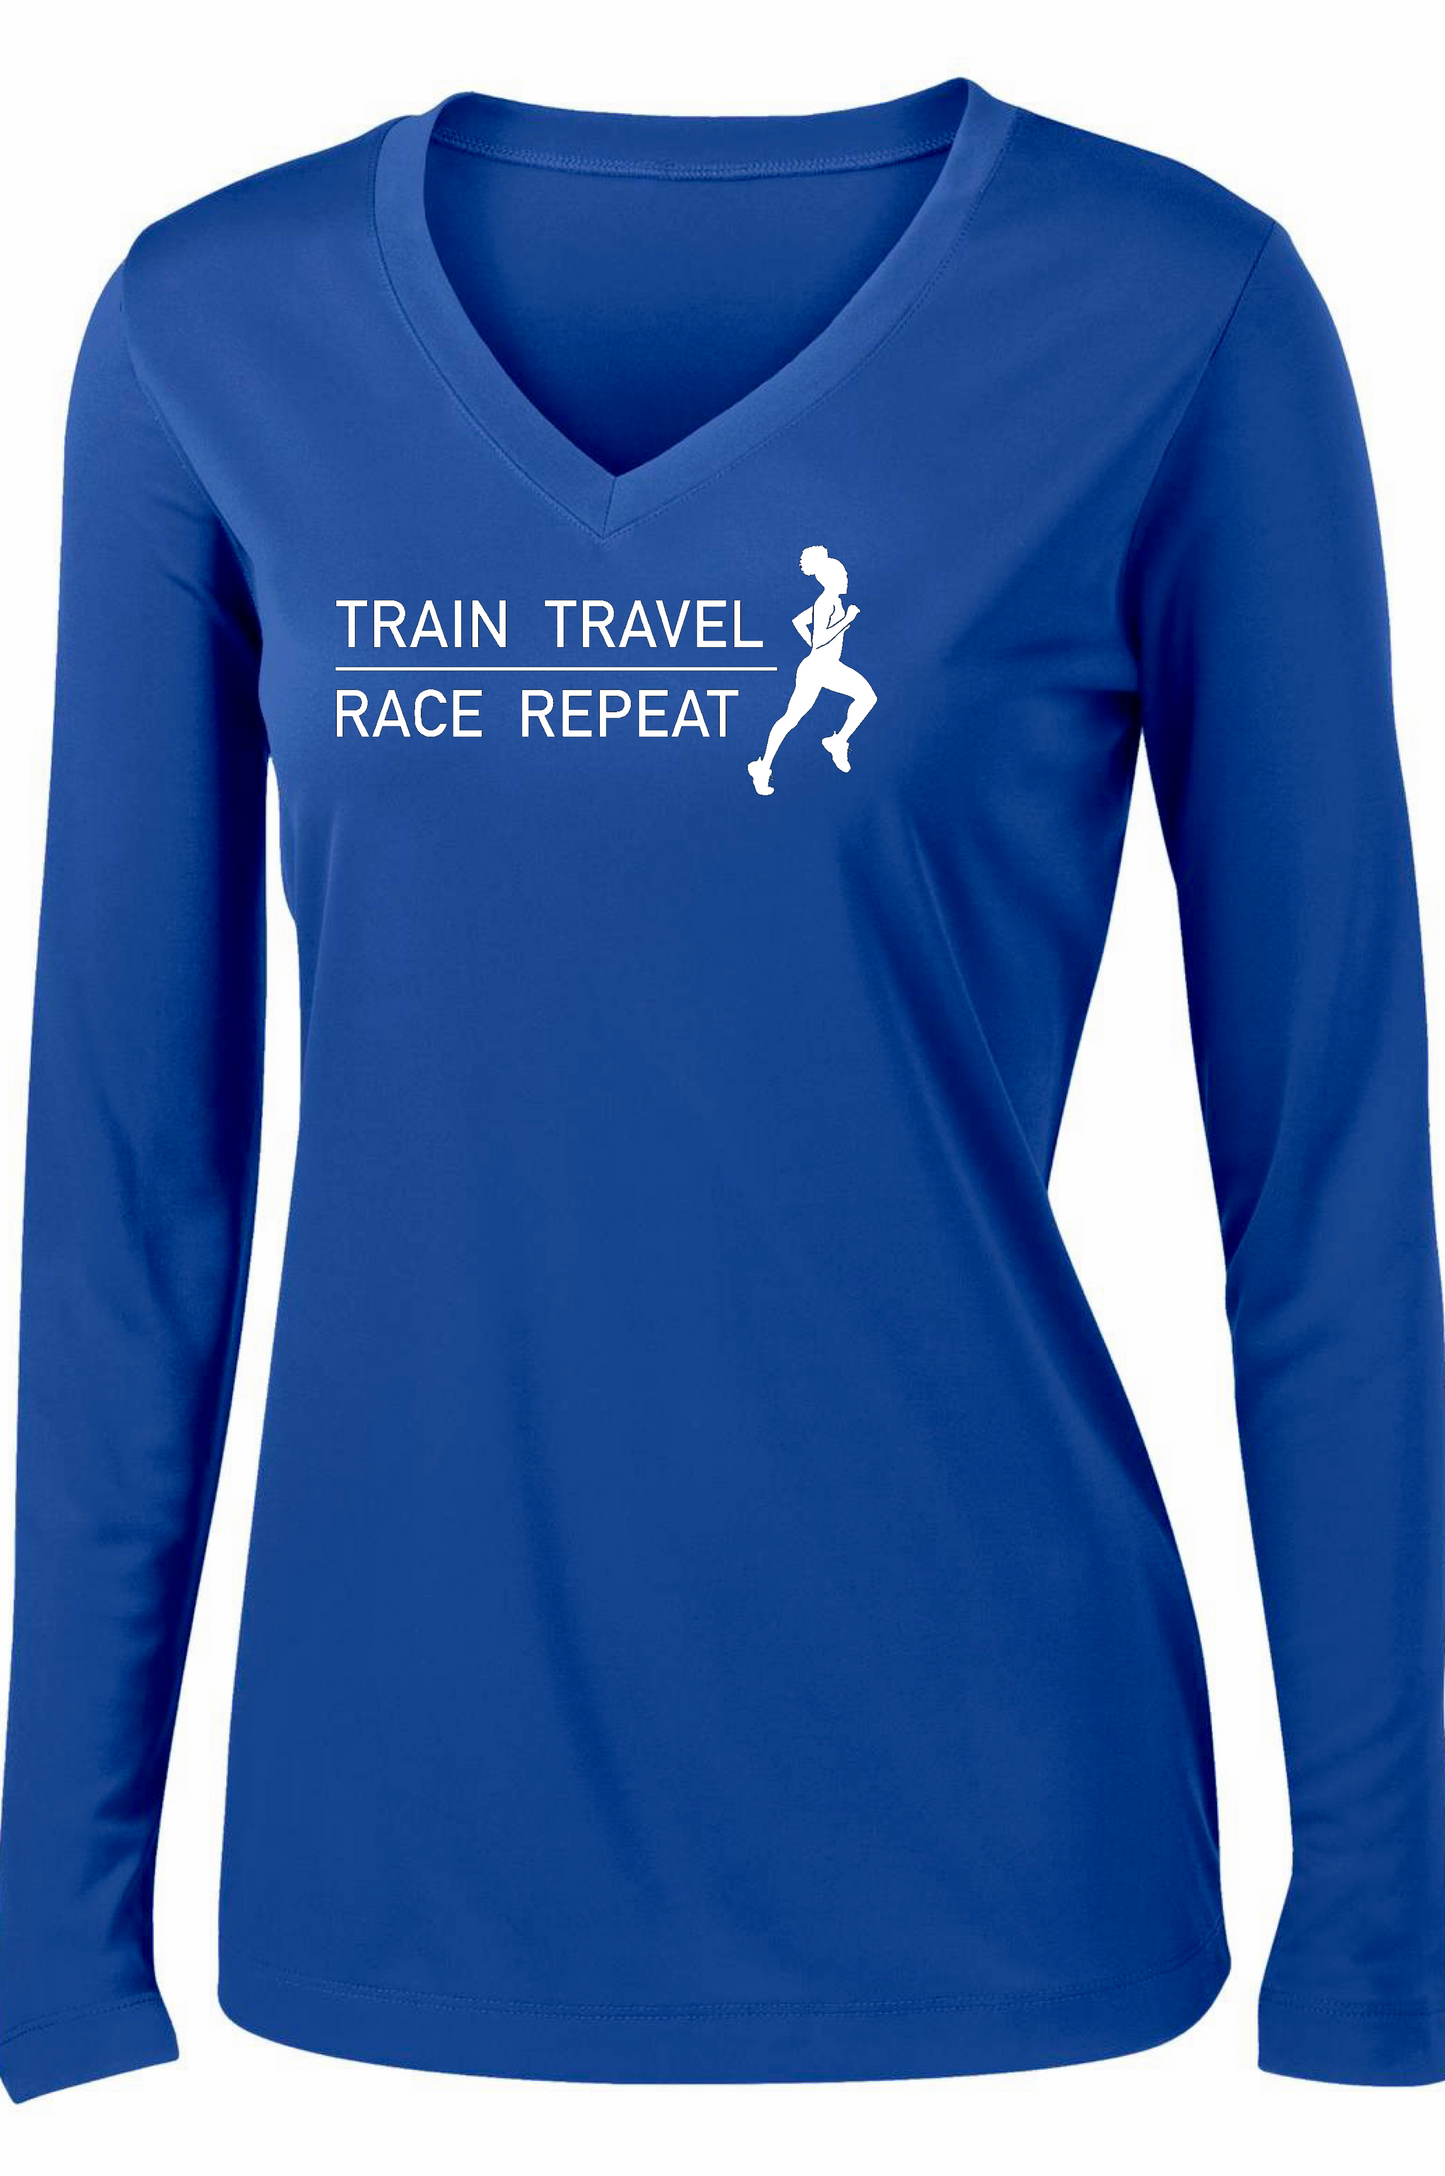 Train Travel Race Repeat Long Sleeve T-shirt